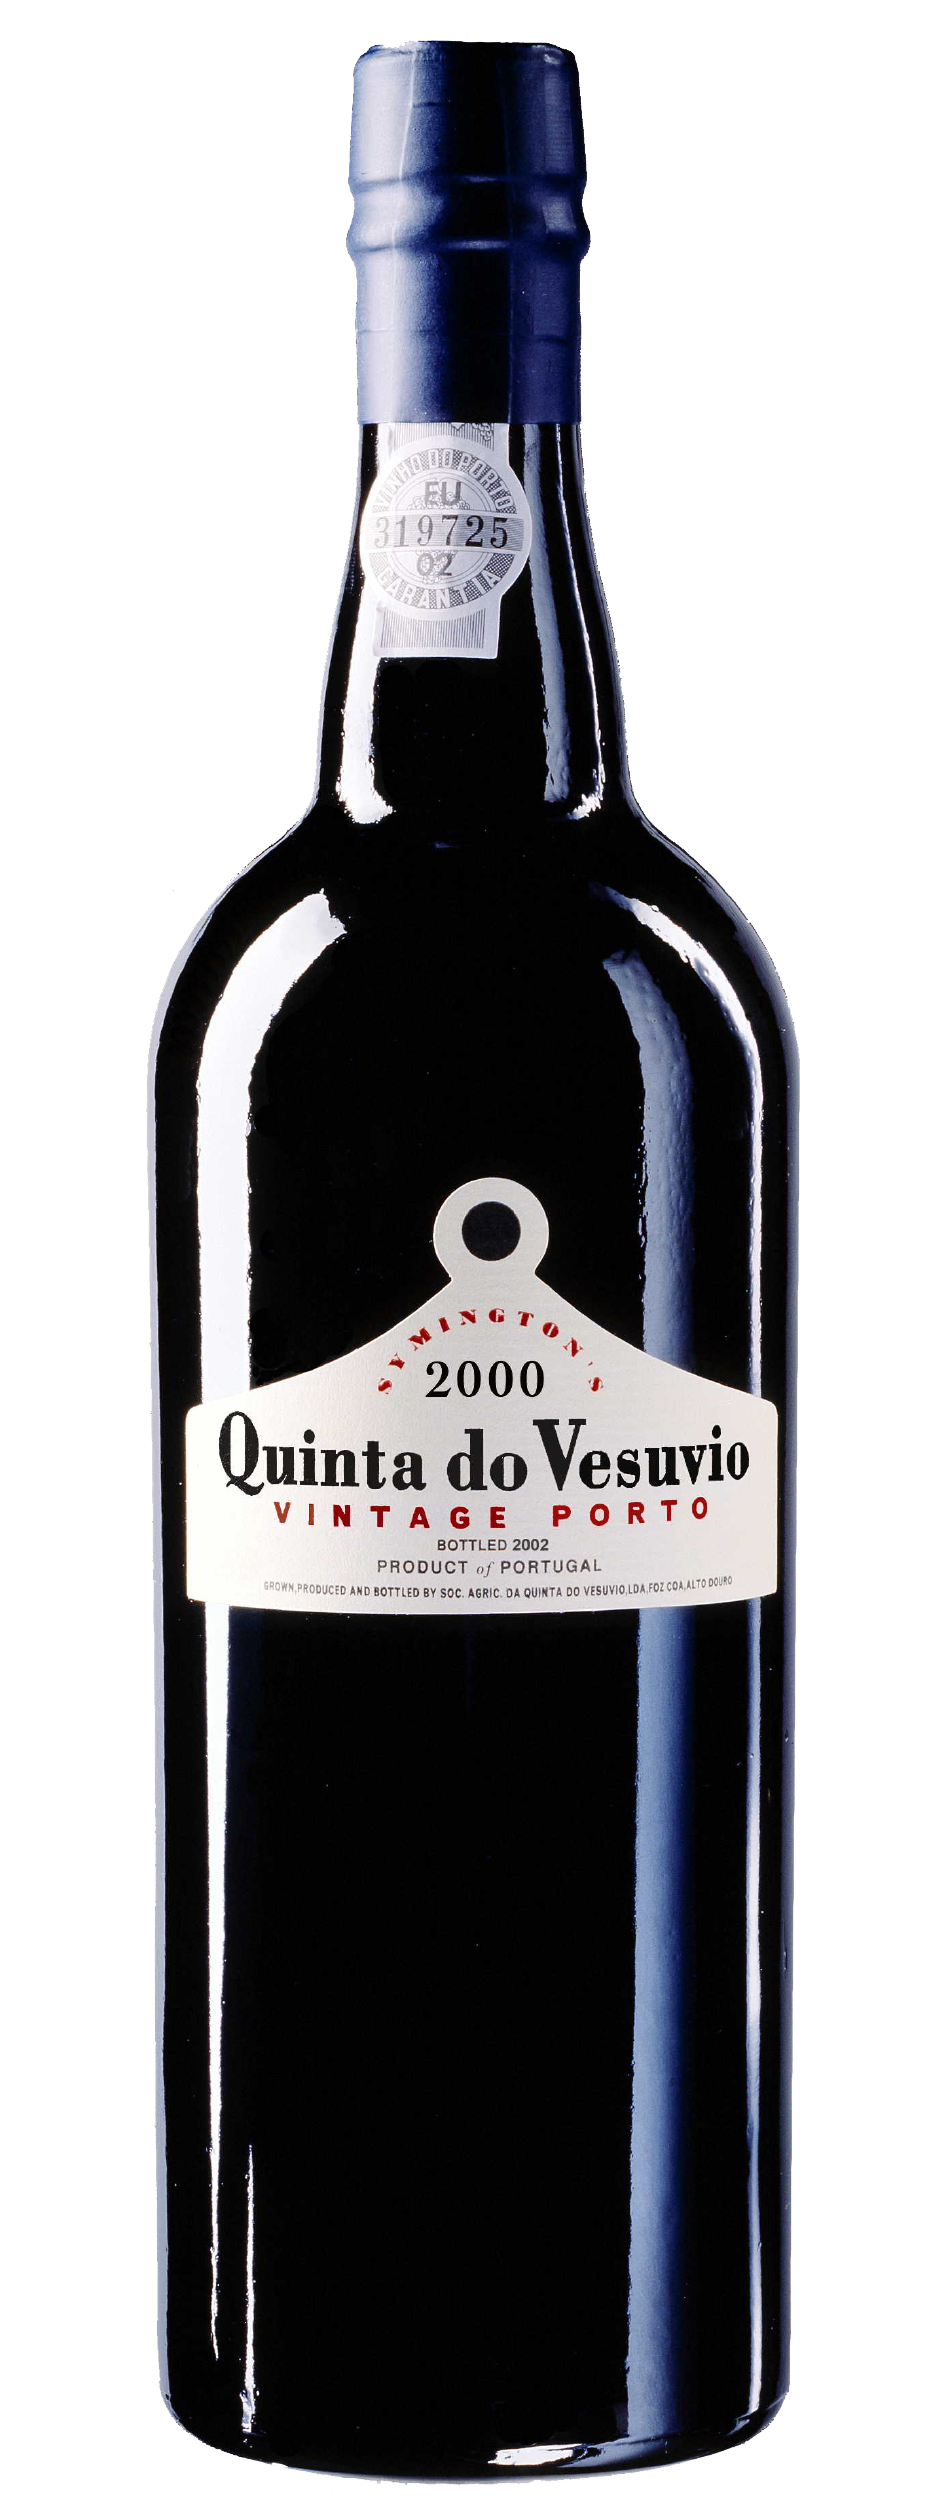 Product Image for QUINTA DO VESUVIO VINTAGE PORT 2000 - MAGNUM